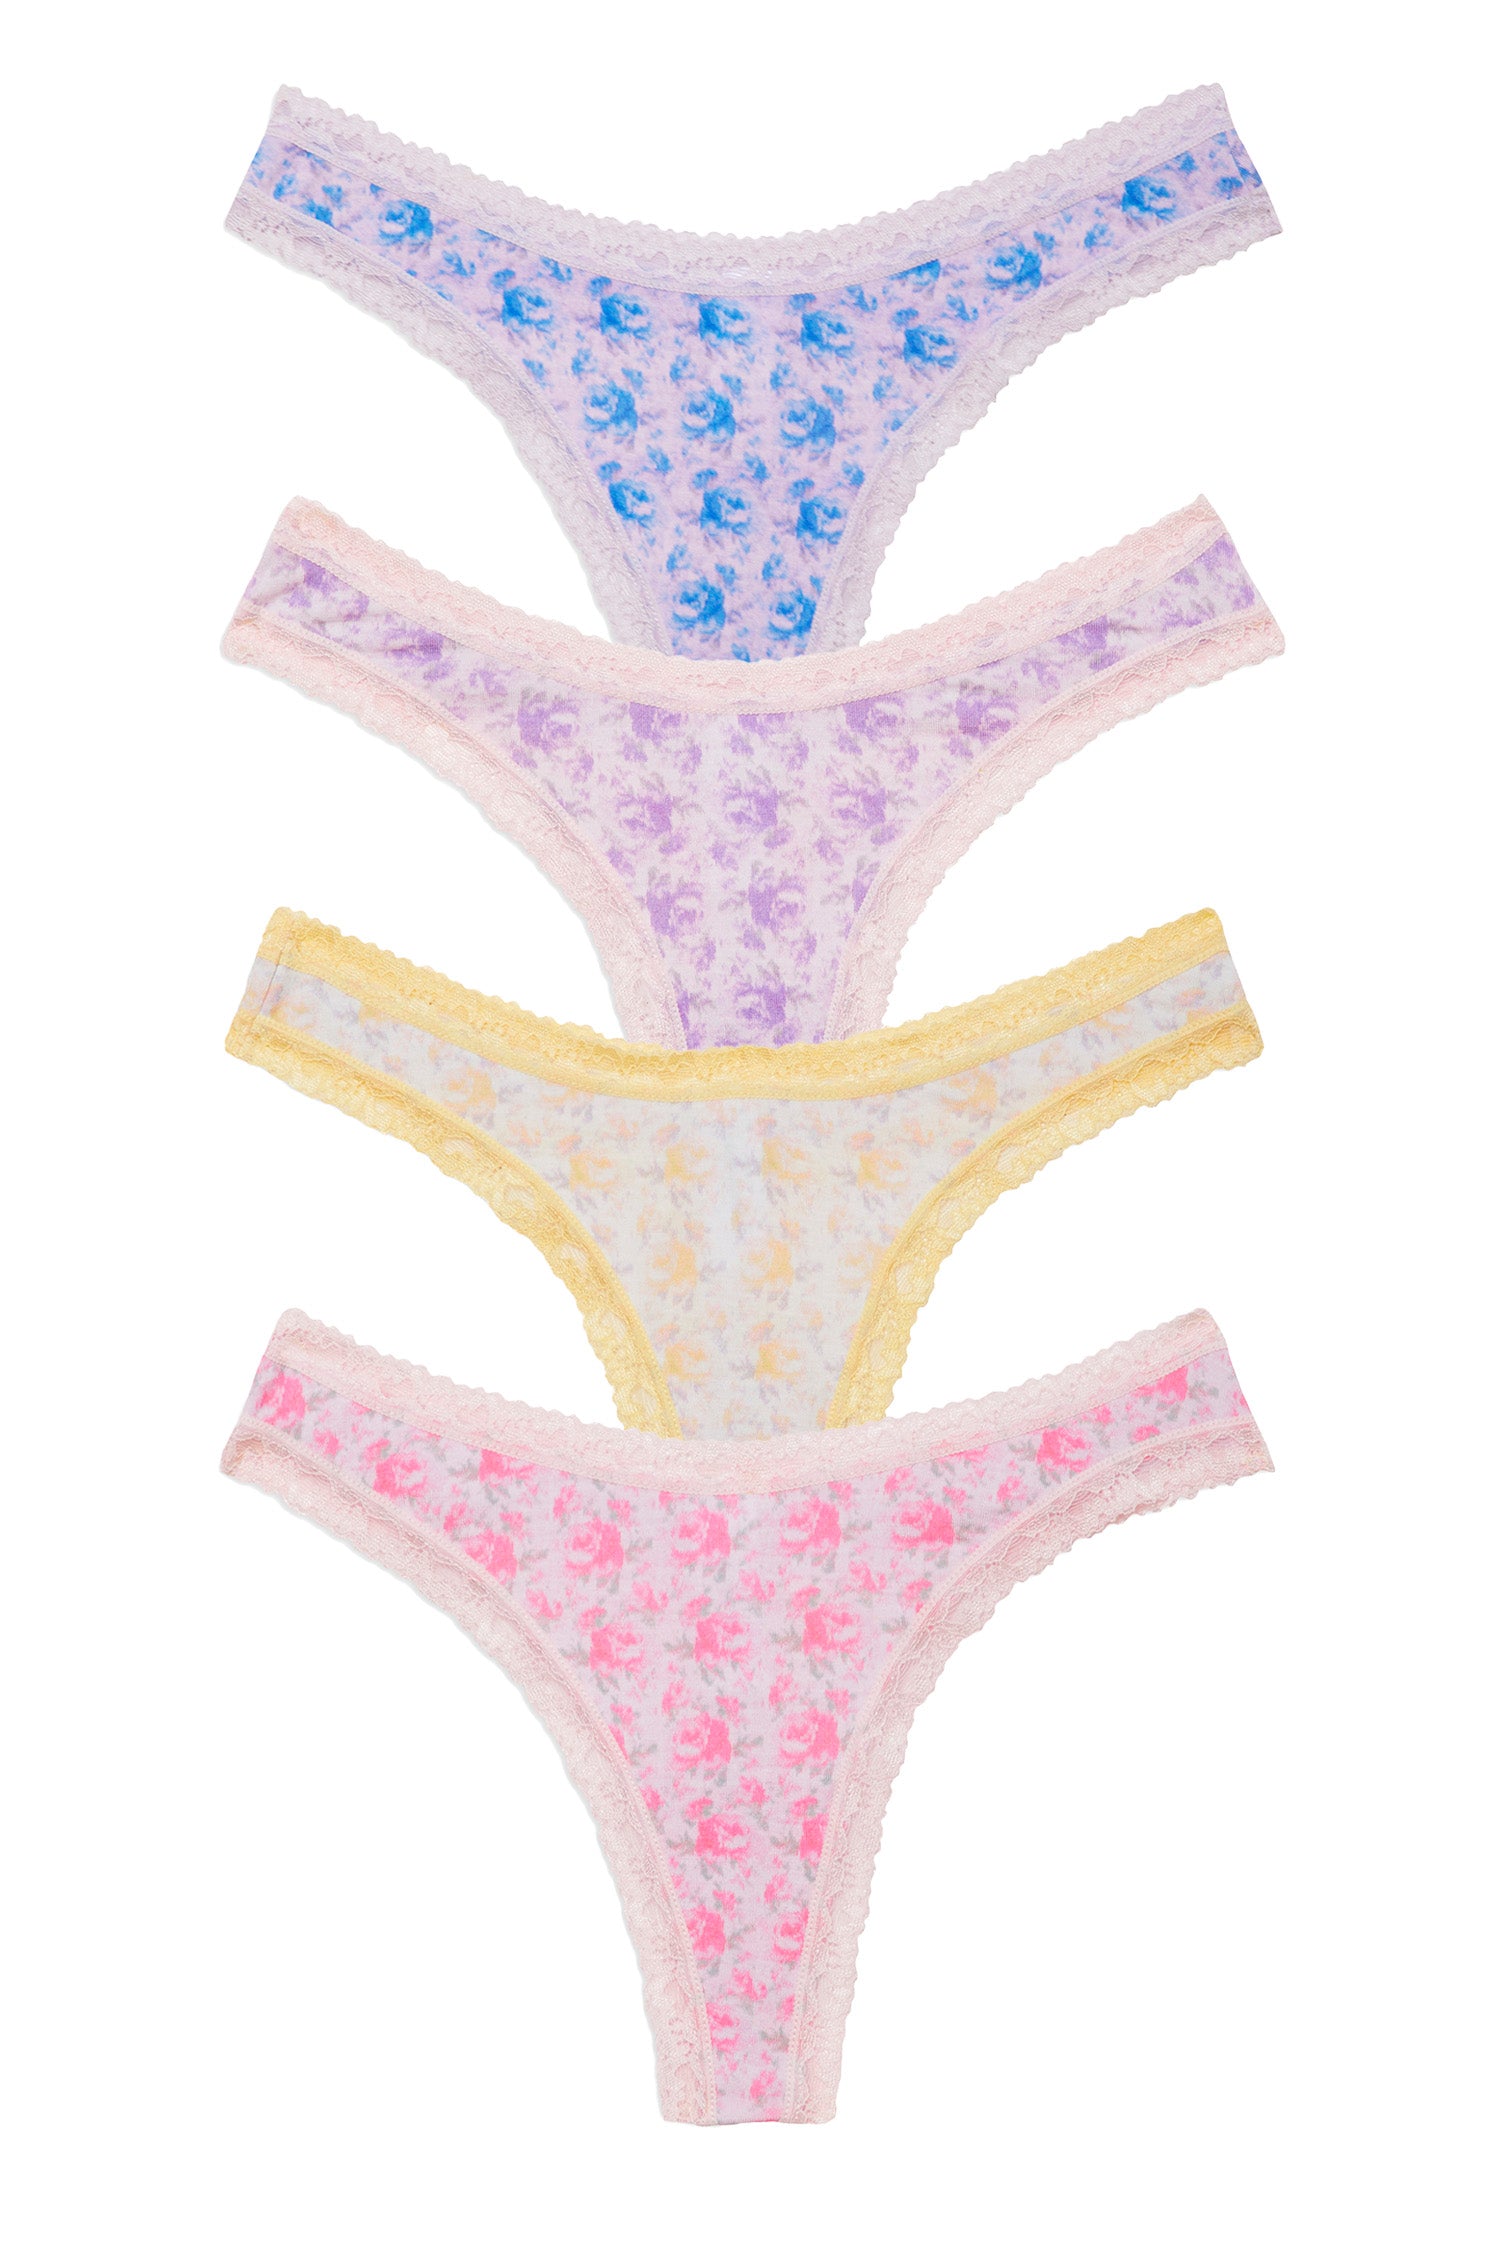 Vibrant Floral Print 4 Pack Thong Box - Women's Underwear